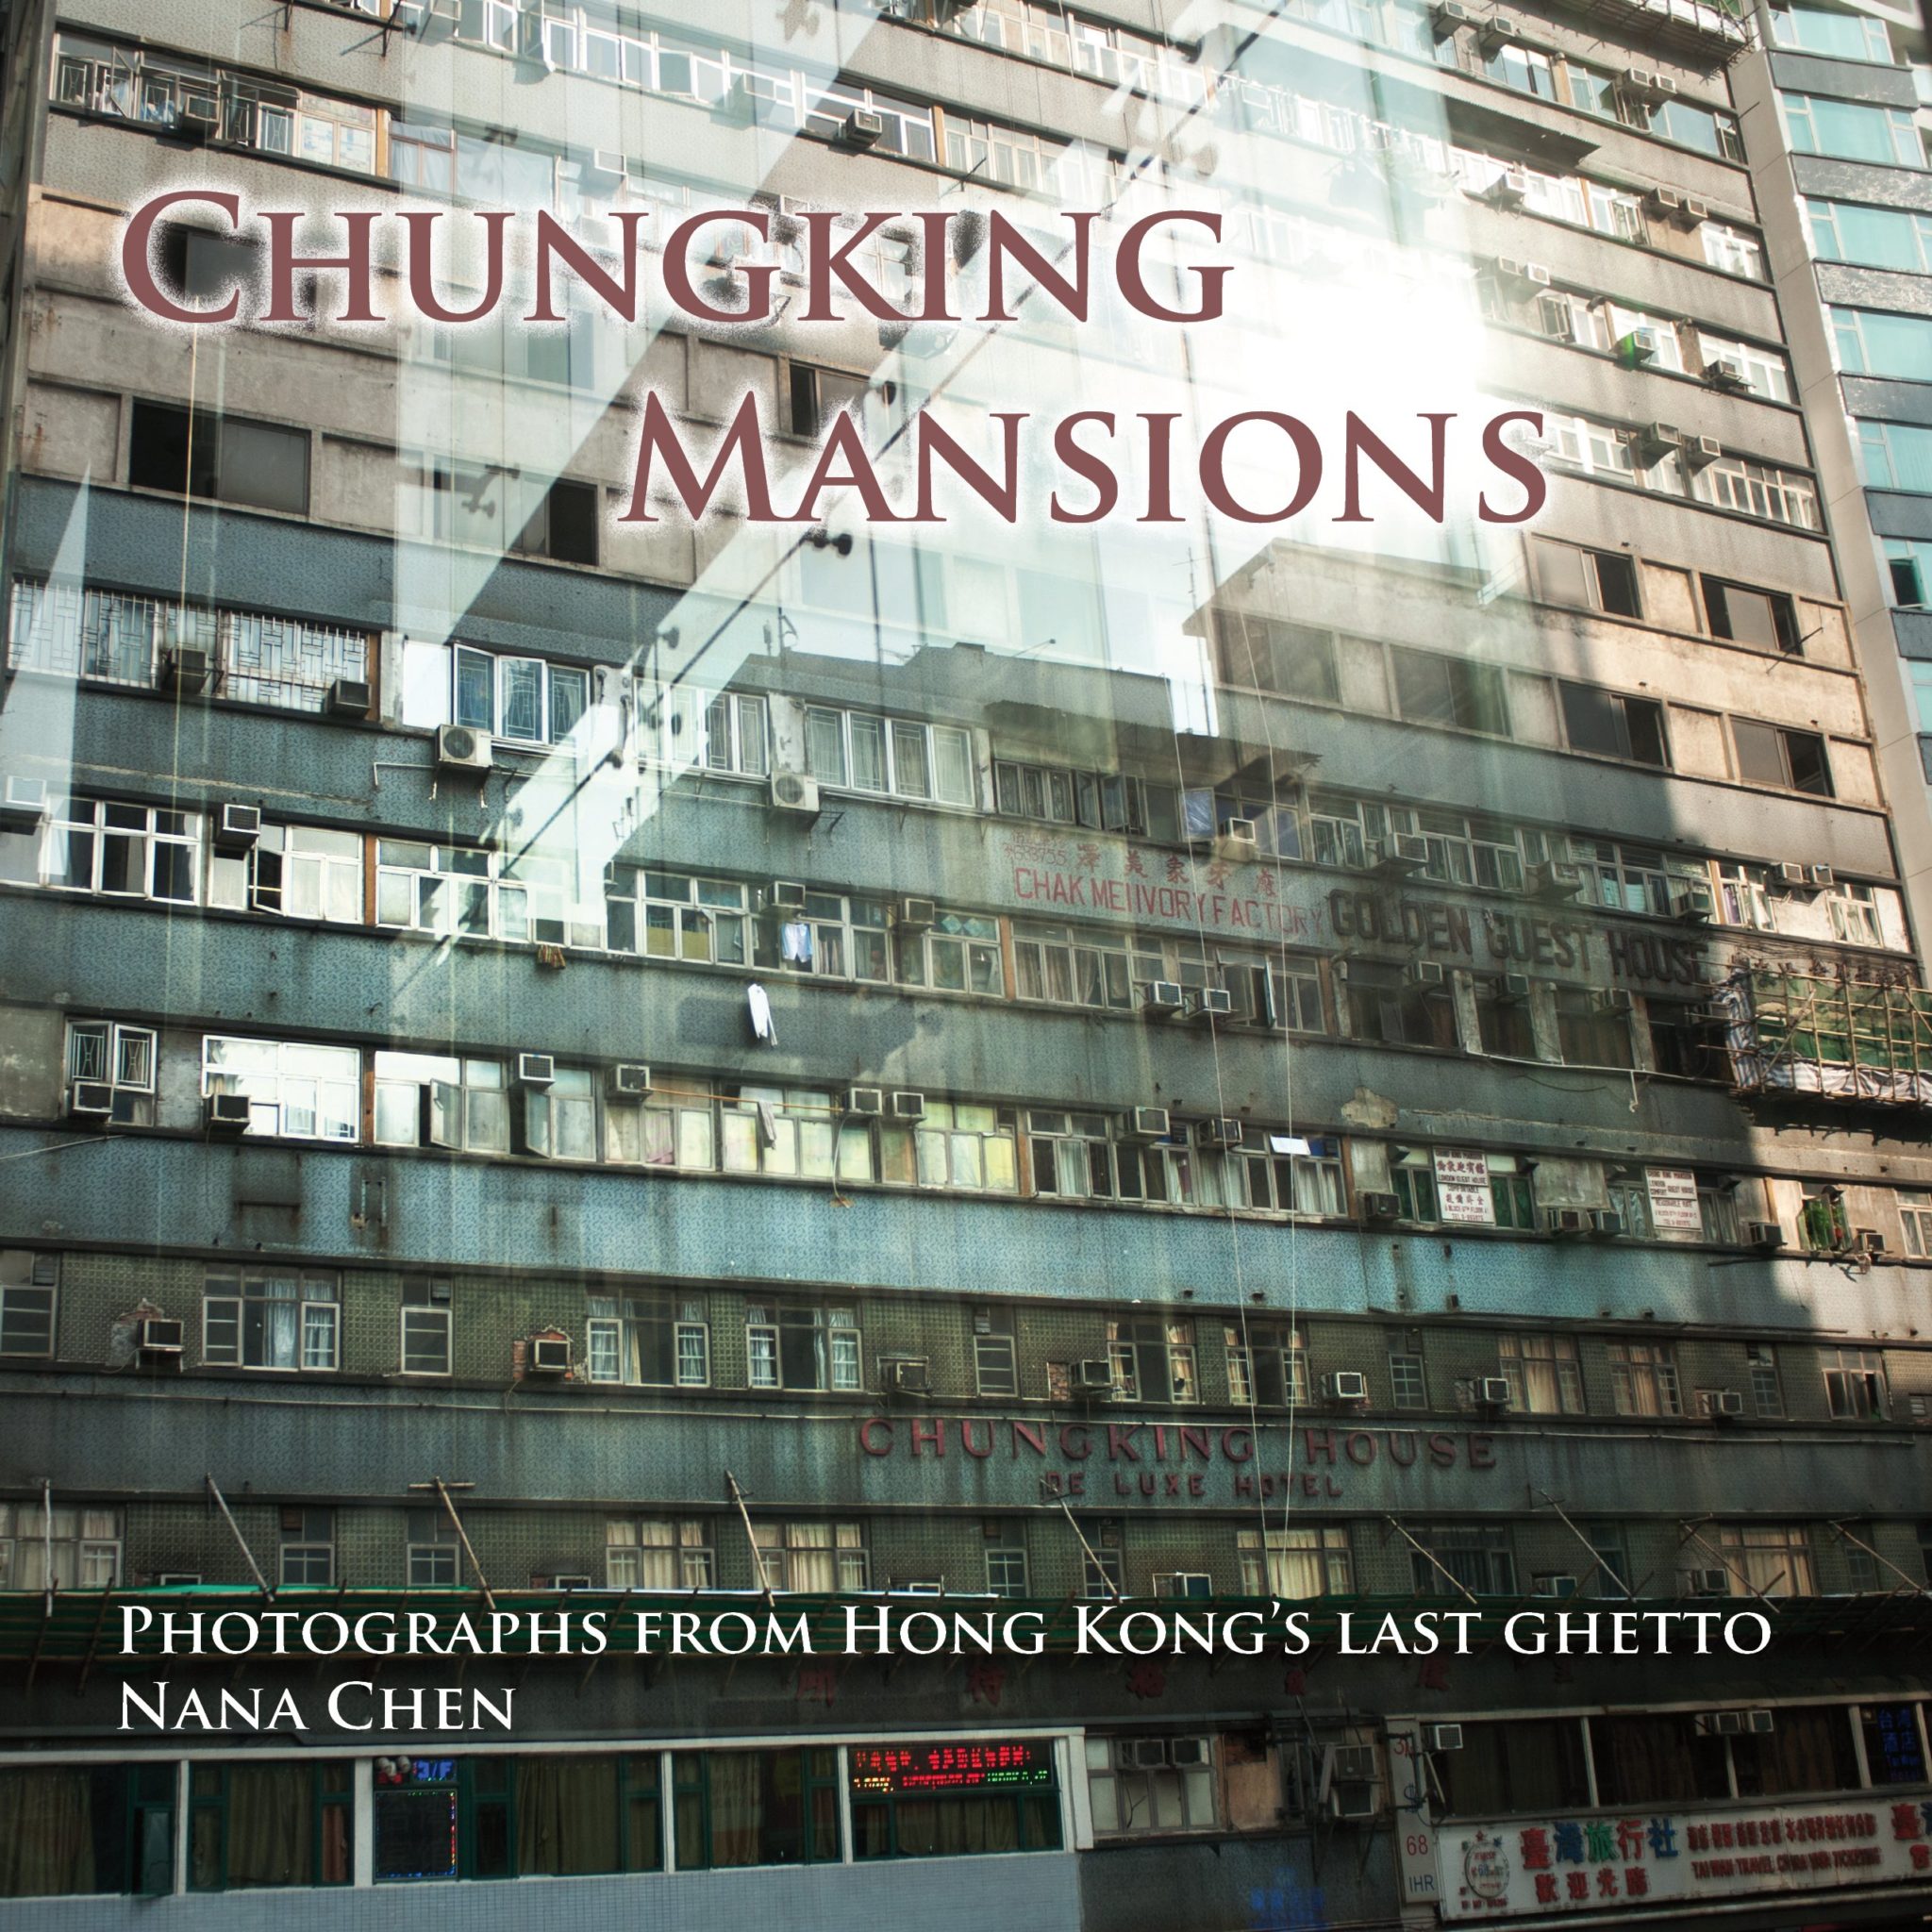 Fotografia | Nana Chen revela a faceta intimista de Chungking Mansions